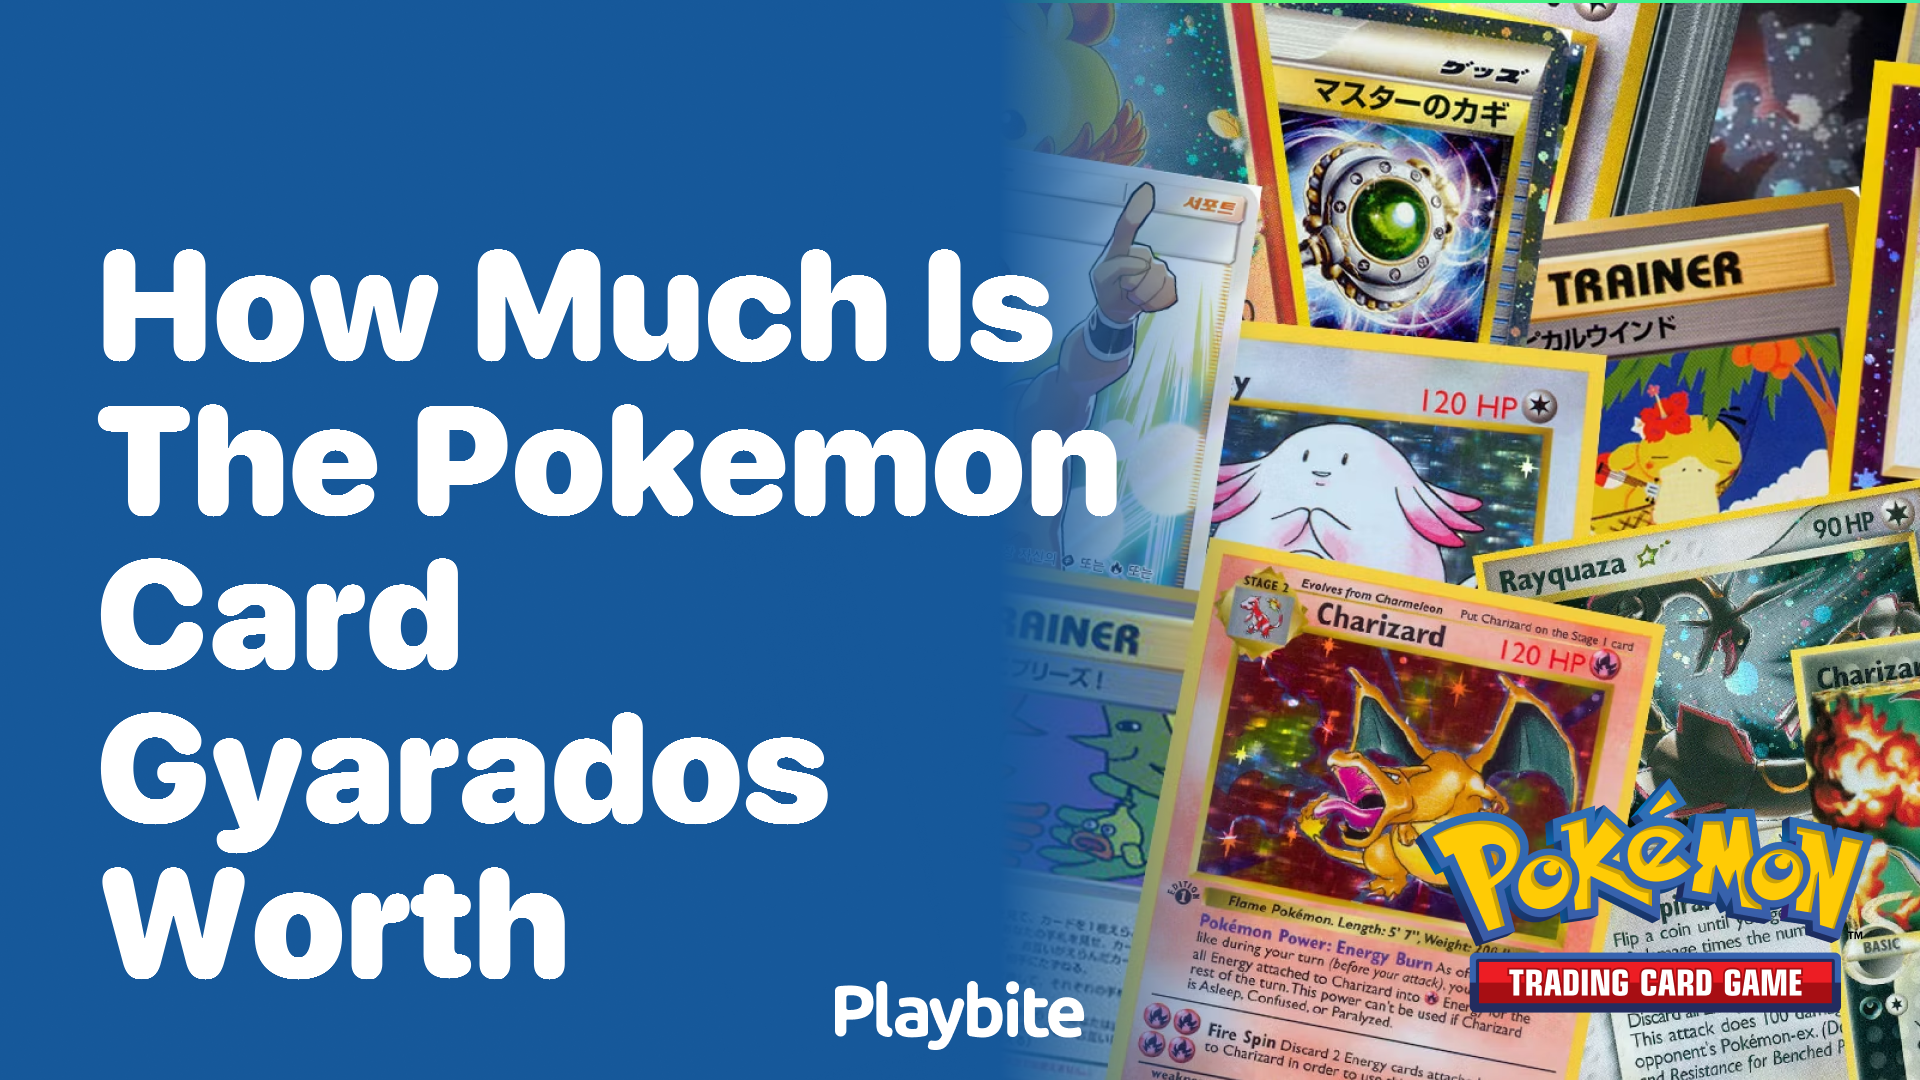 How much is the Pokemon Card Gyarados worth?